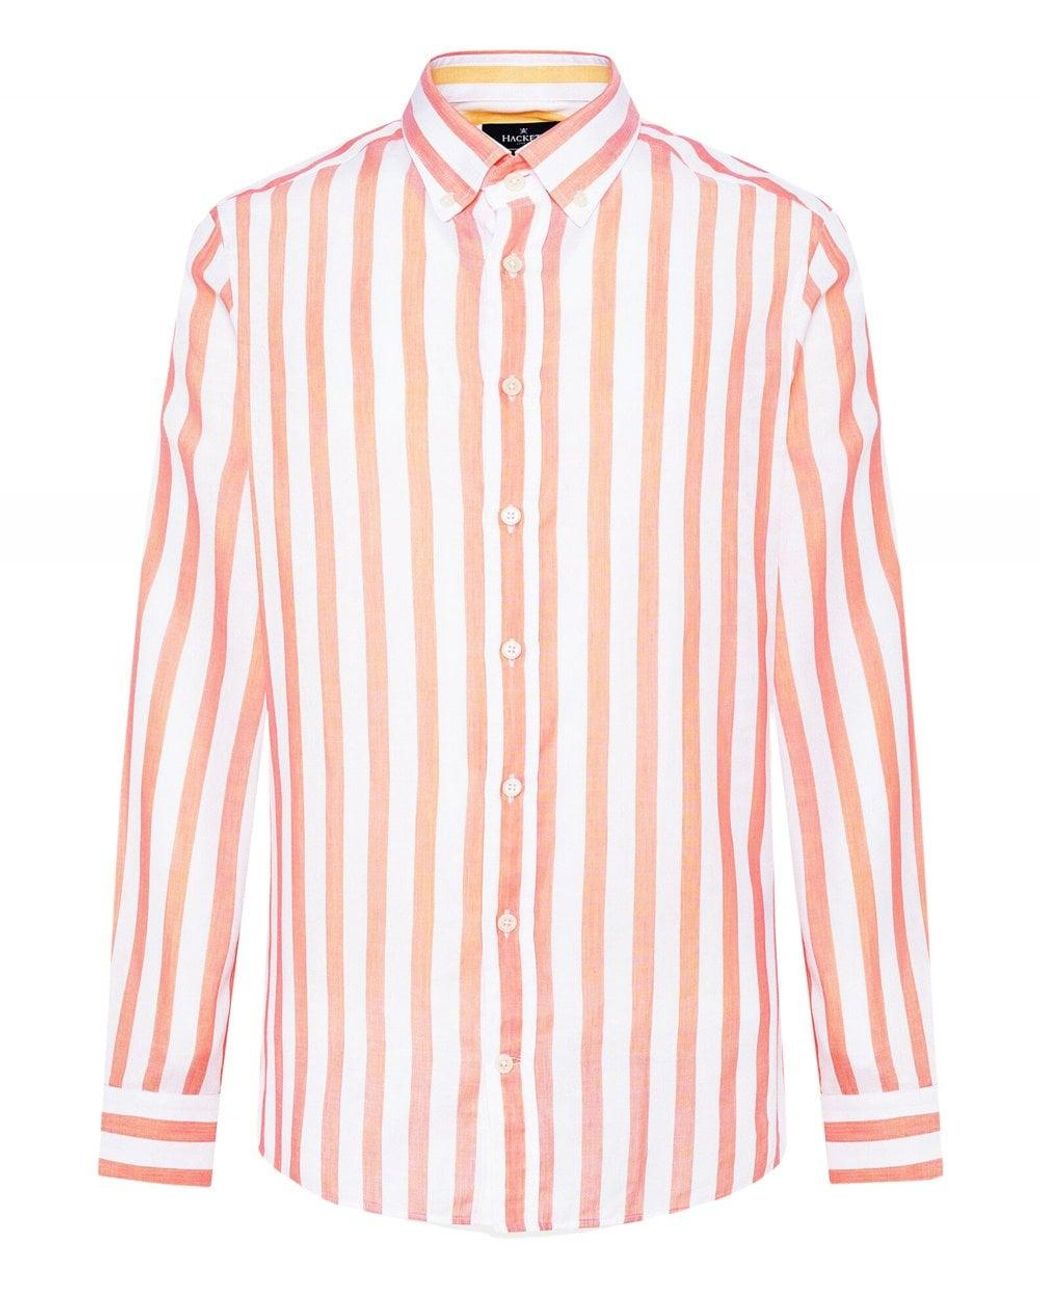 Hackett Slim Fit Butcher Stripe Shirt in Pink for Men - Lyst